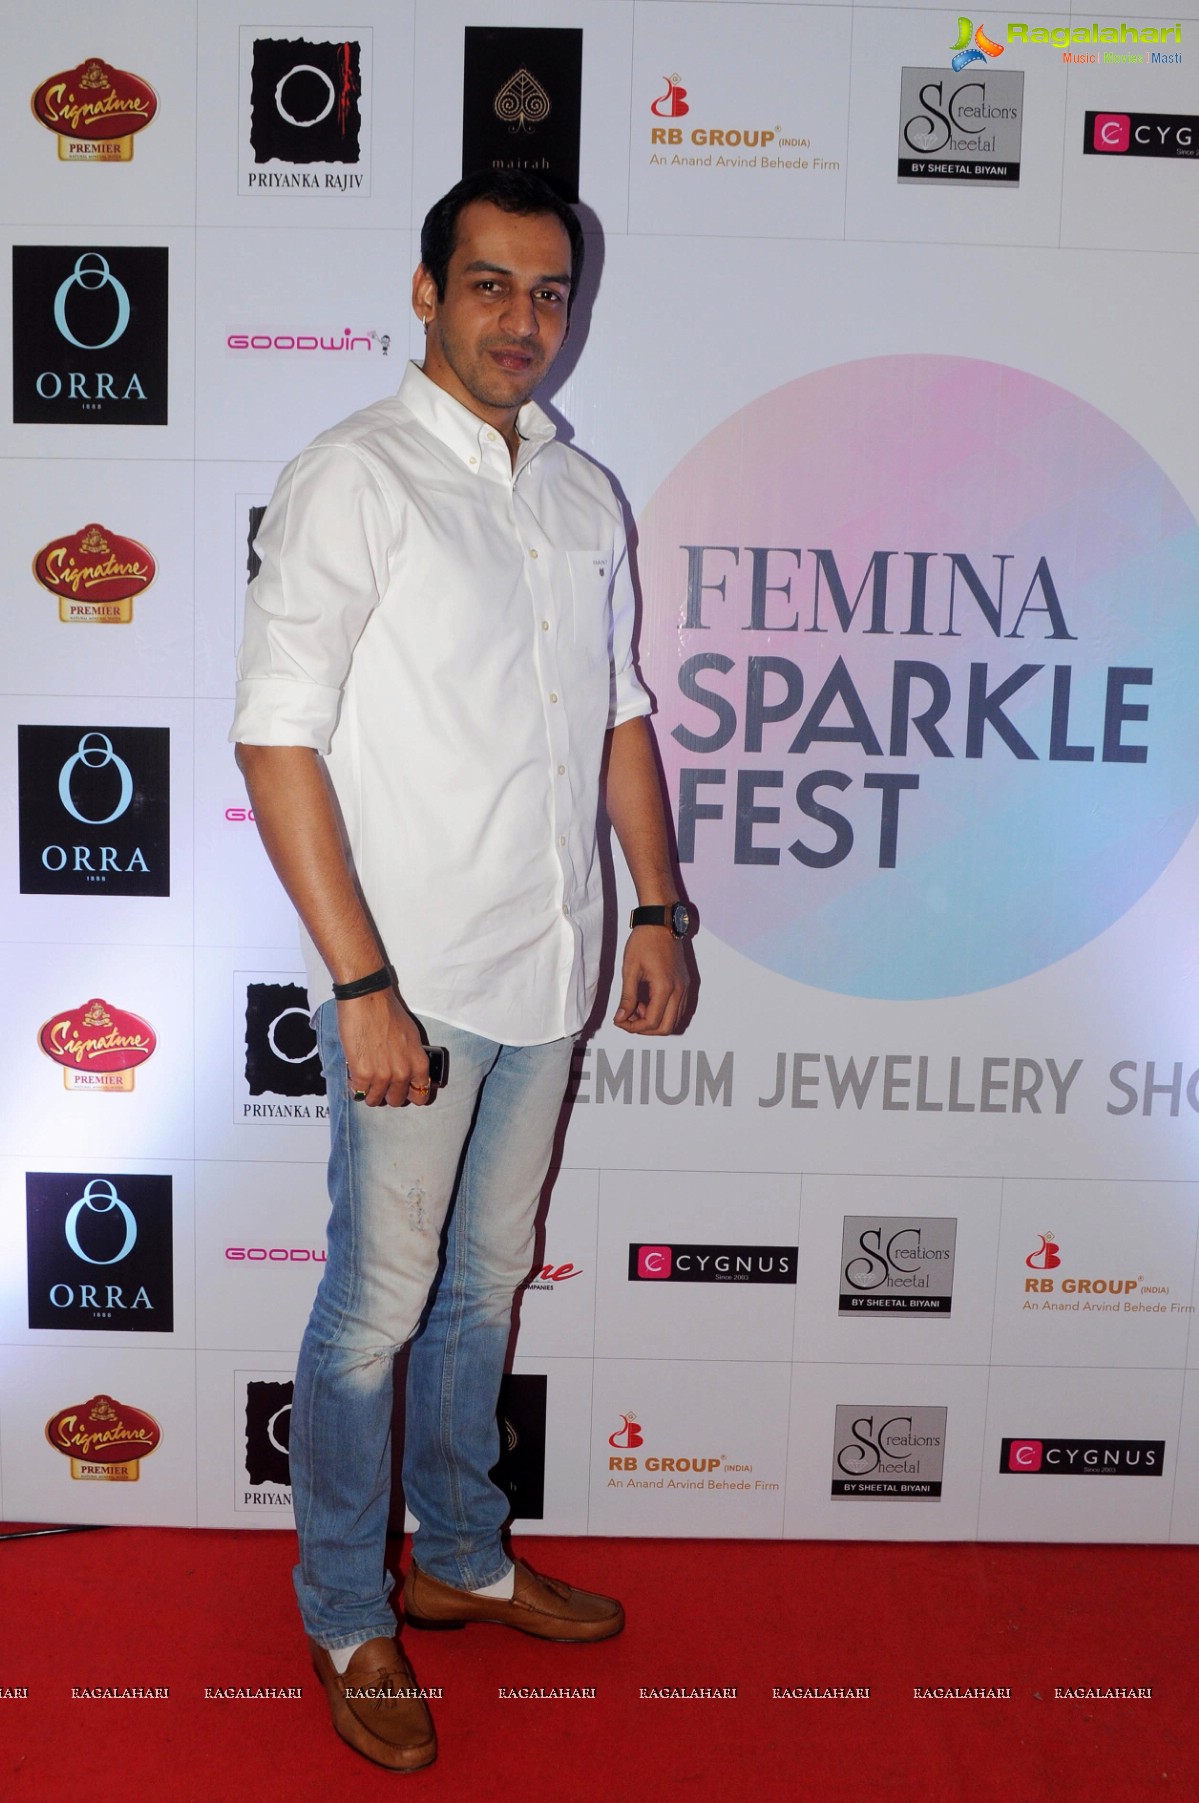 Femina Sparkle Fest 2014, Mumbai